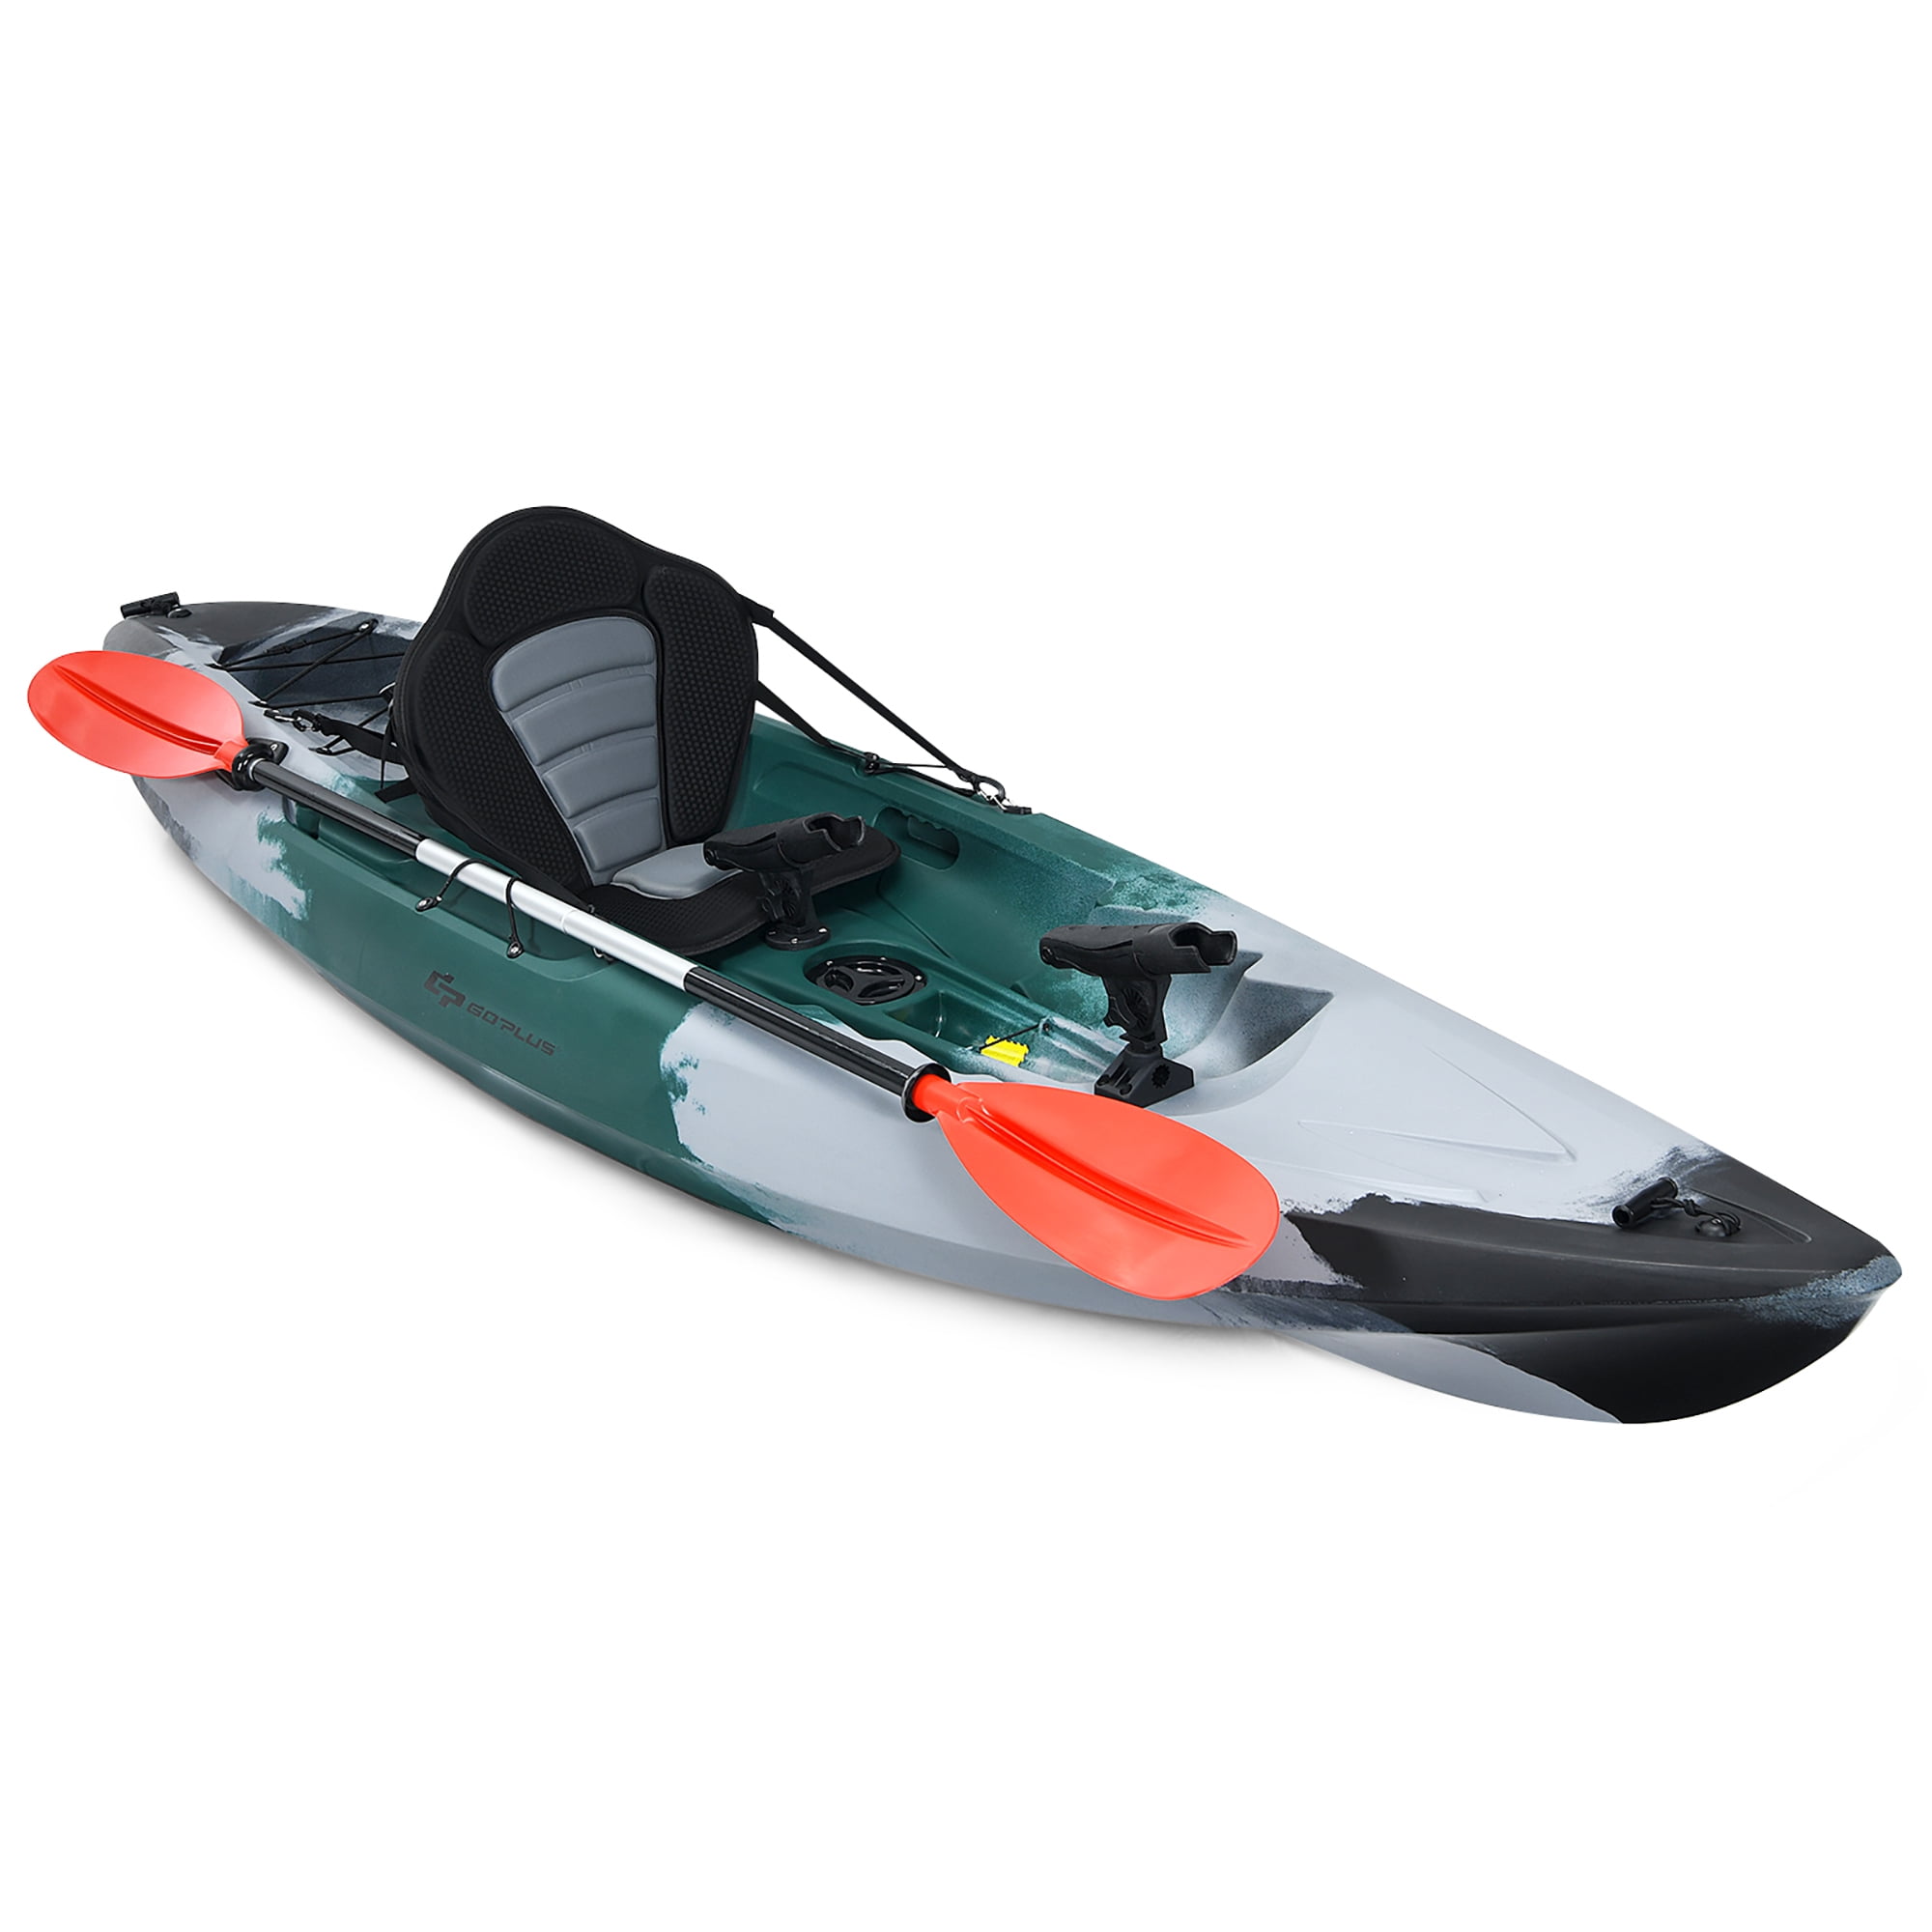 Black Comfortable Soft Padded Seat Cushion For Kayak Canoe Fishing Drift Boat US 